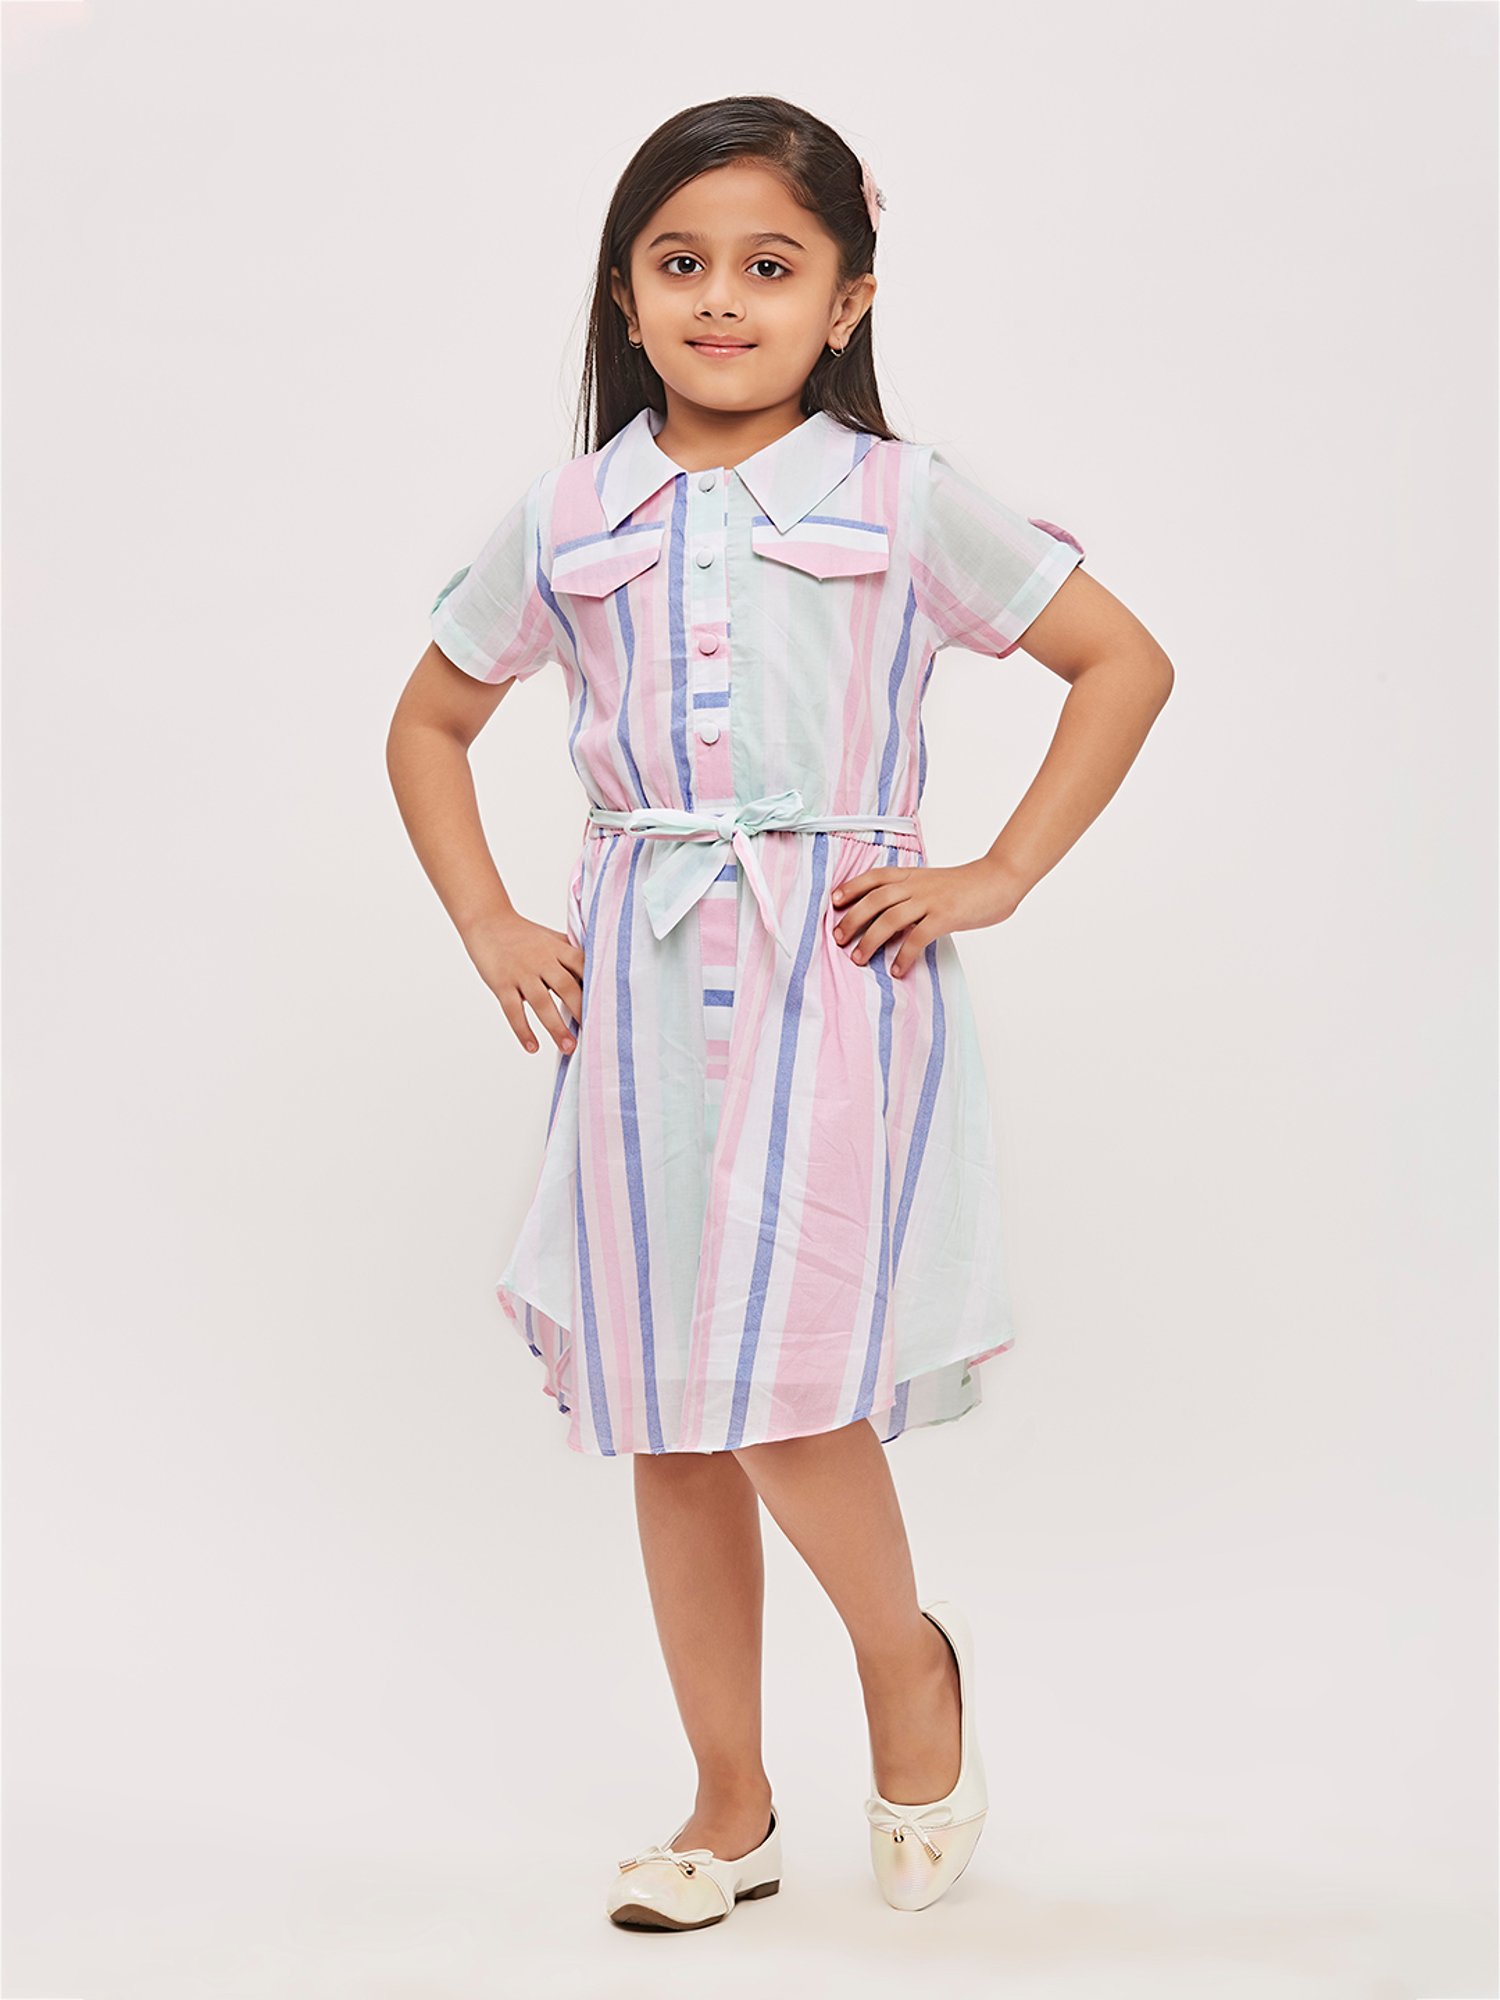 Bulkbuy Custom Stylish Pleated Dress Girls School Uniform Design Primary  School Girls Pinafore price comparison